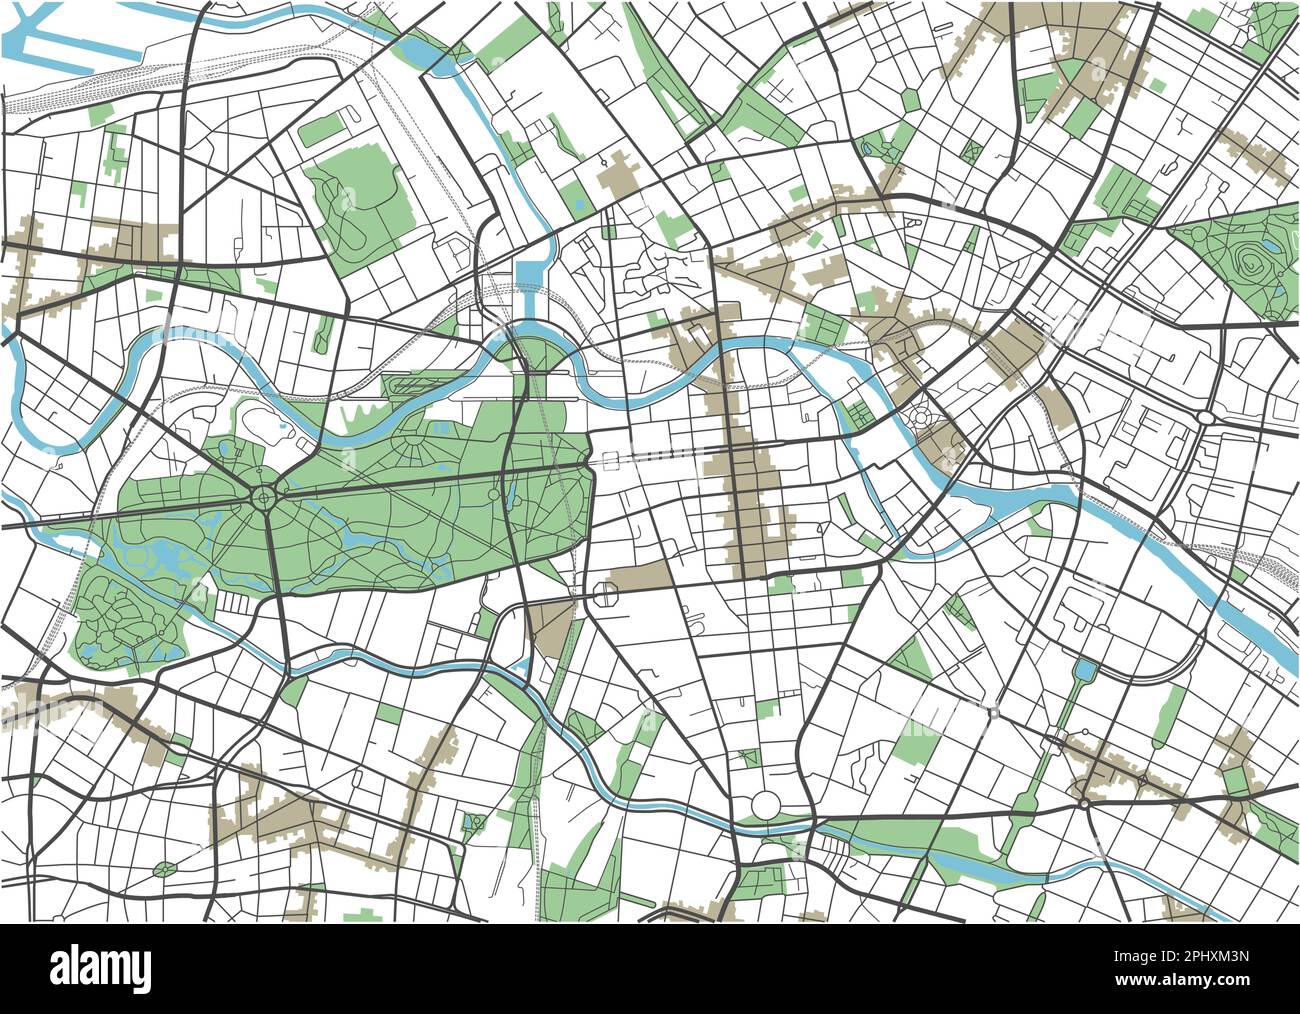 Farbenfroher Stadtplan von Berlin. Stock Vektor